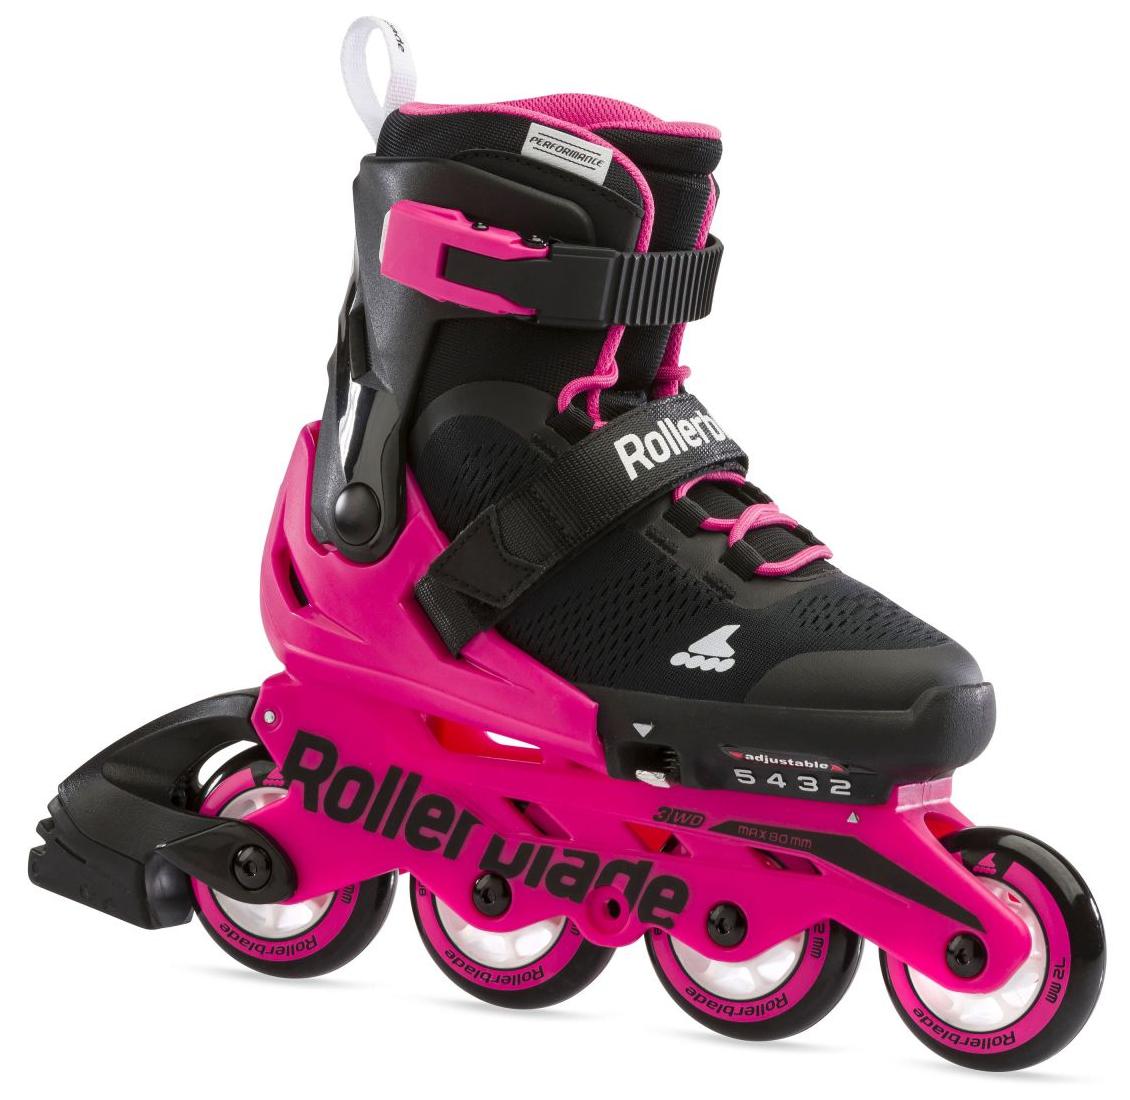 Роликовые коньки Rollerblade Microblade G Black/Neon Pink